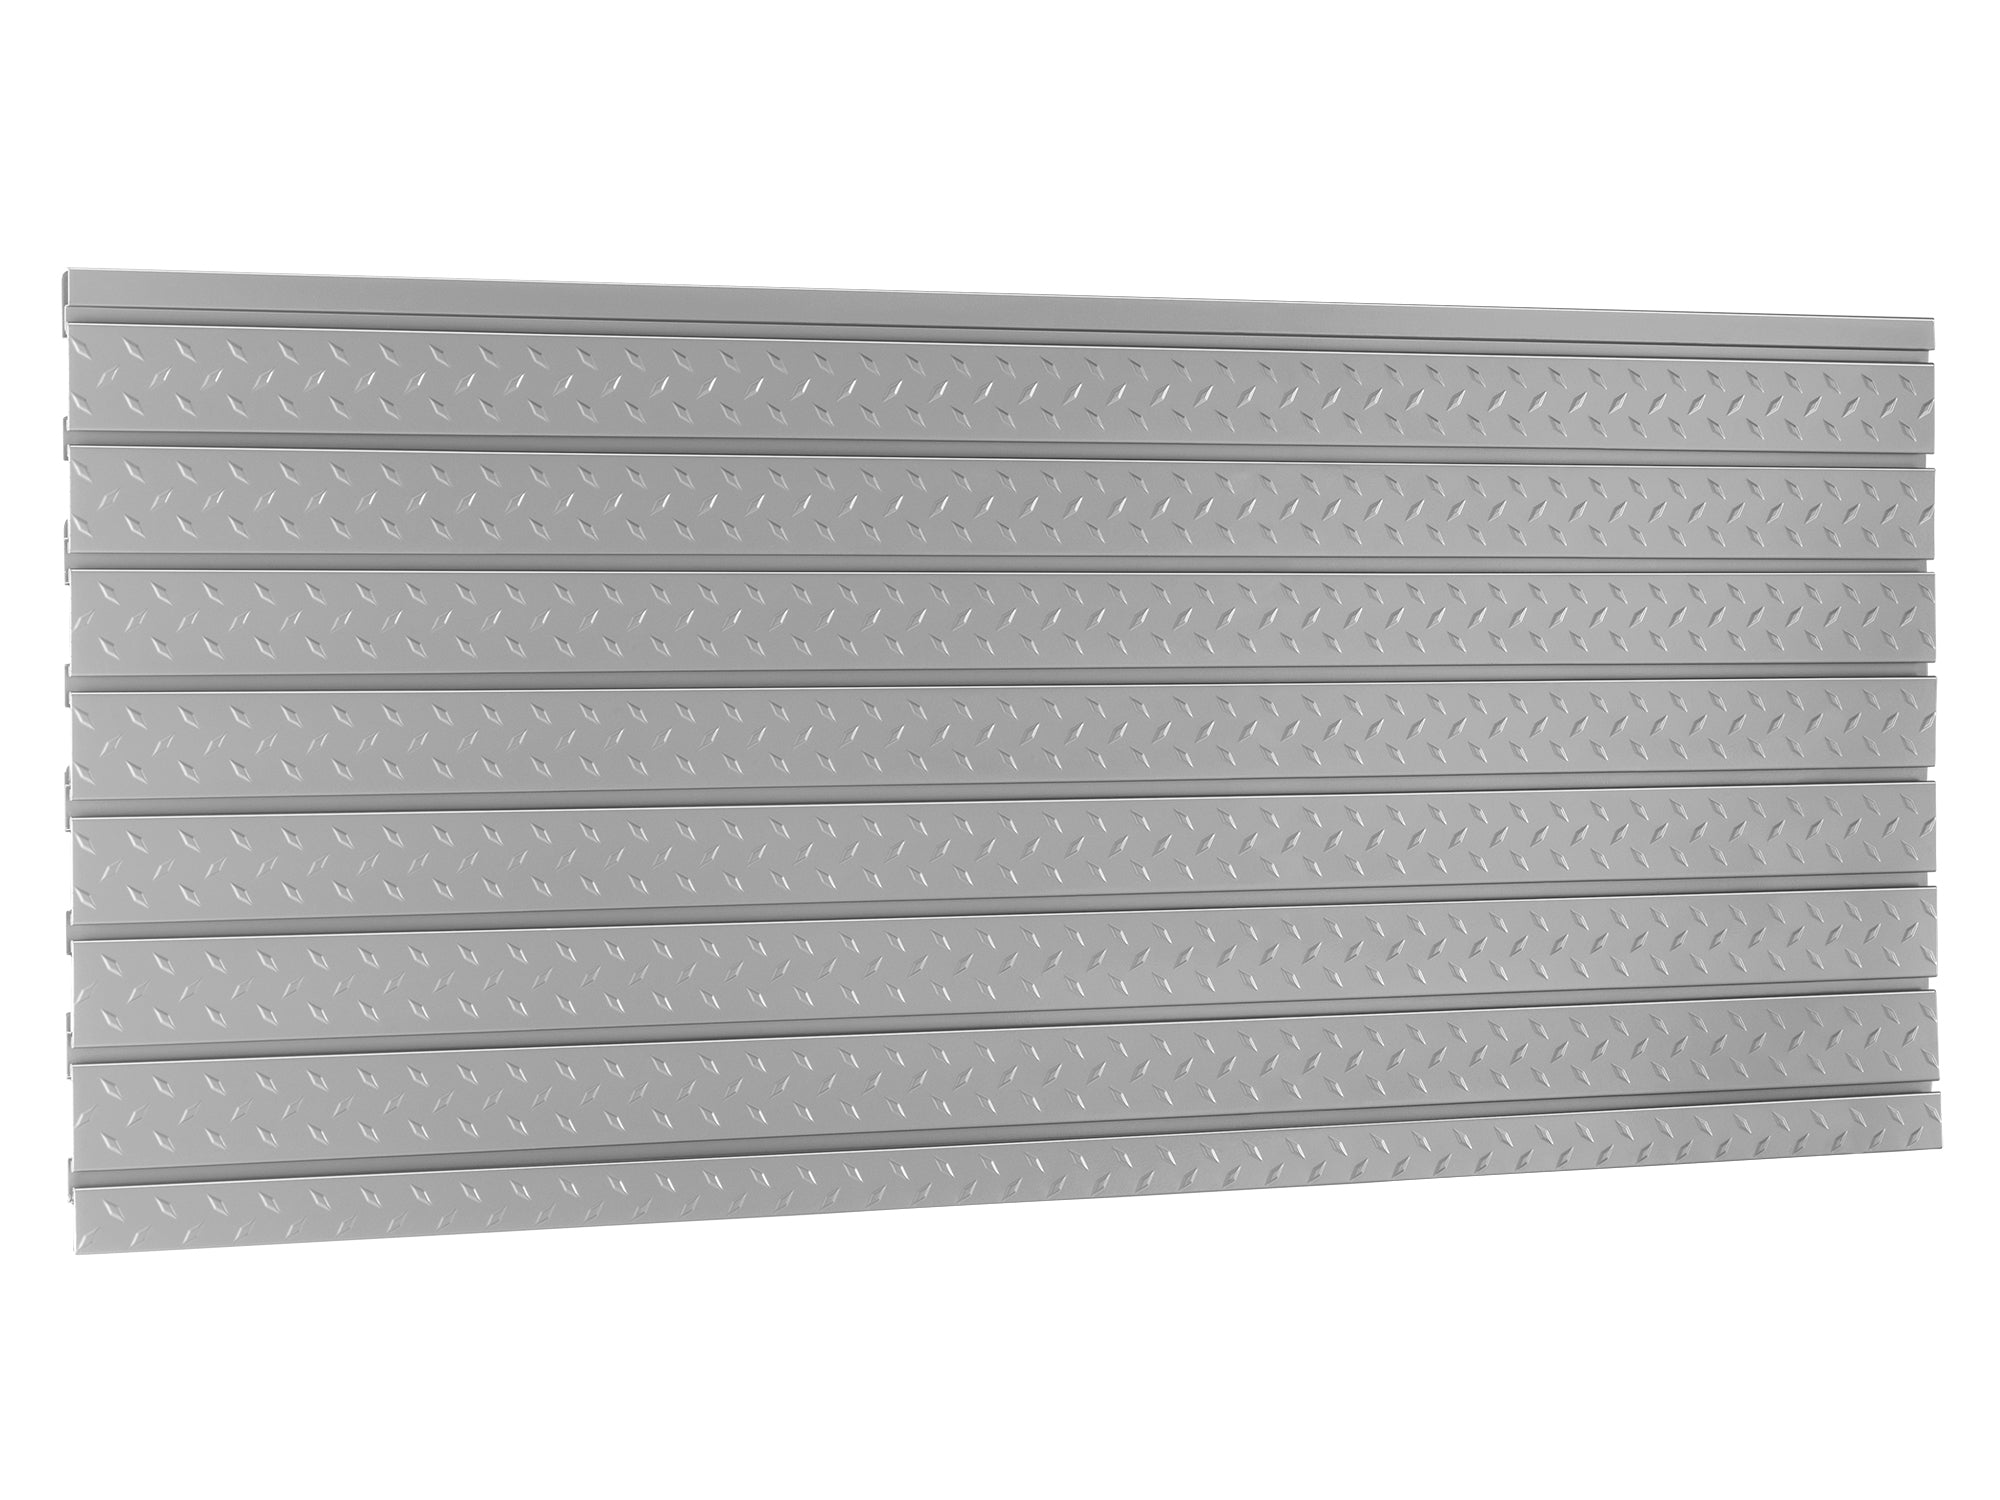 2 x Pro Series 56 in. Diamond Plate Slatwall Backsplash - Silver